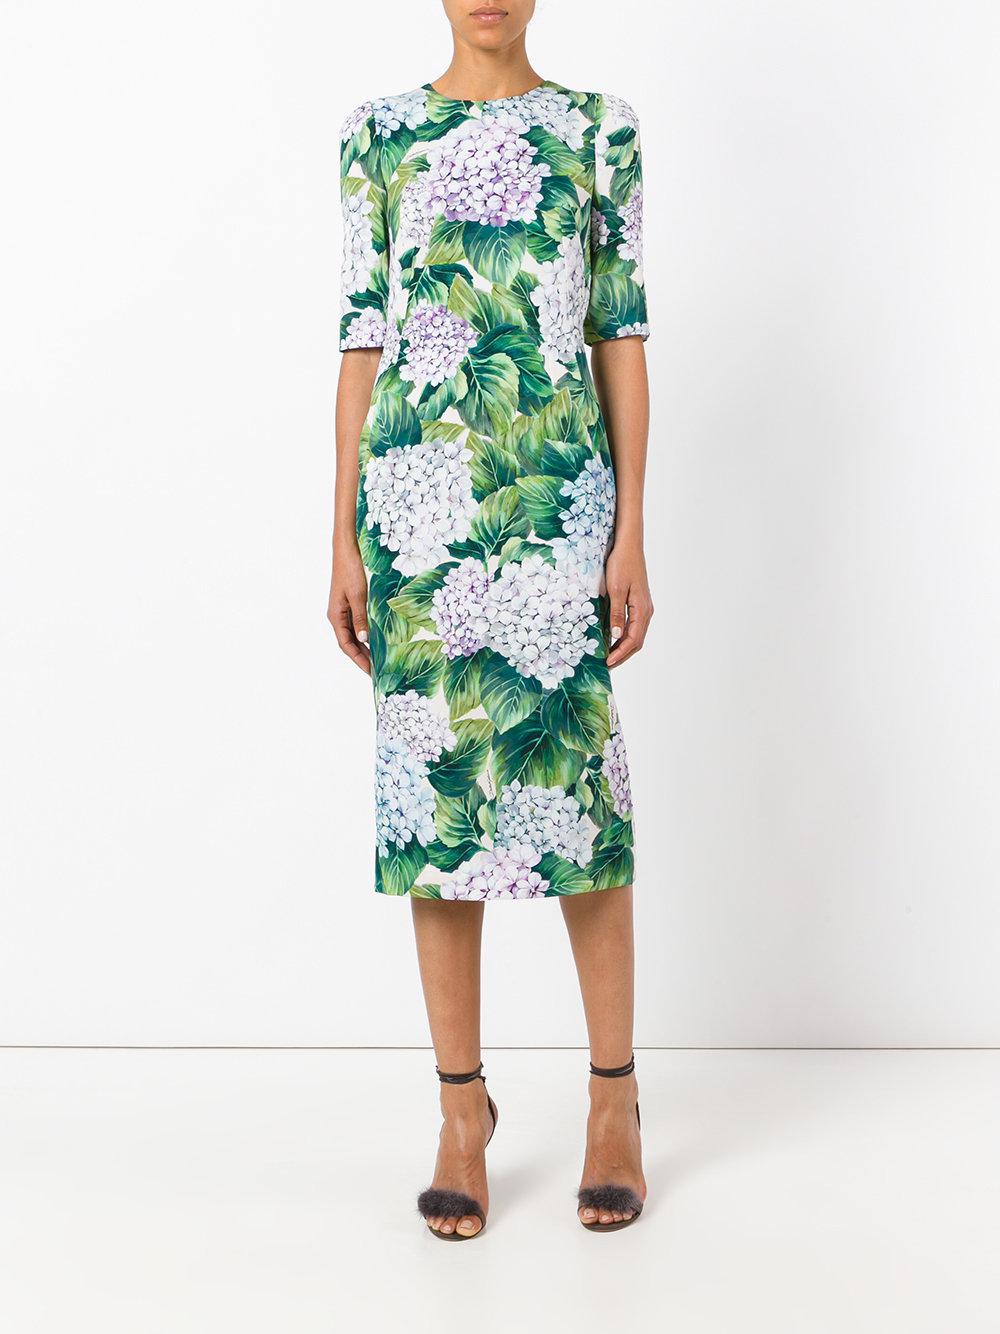 Dolce & Gabbana Silk Hydrangea Print Dress in Green - Lyst